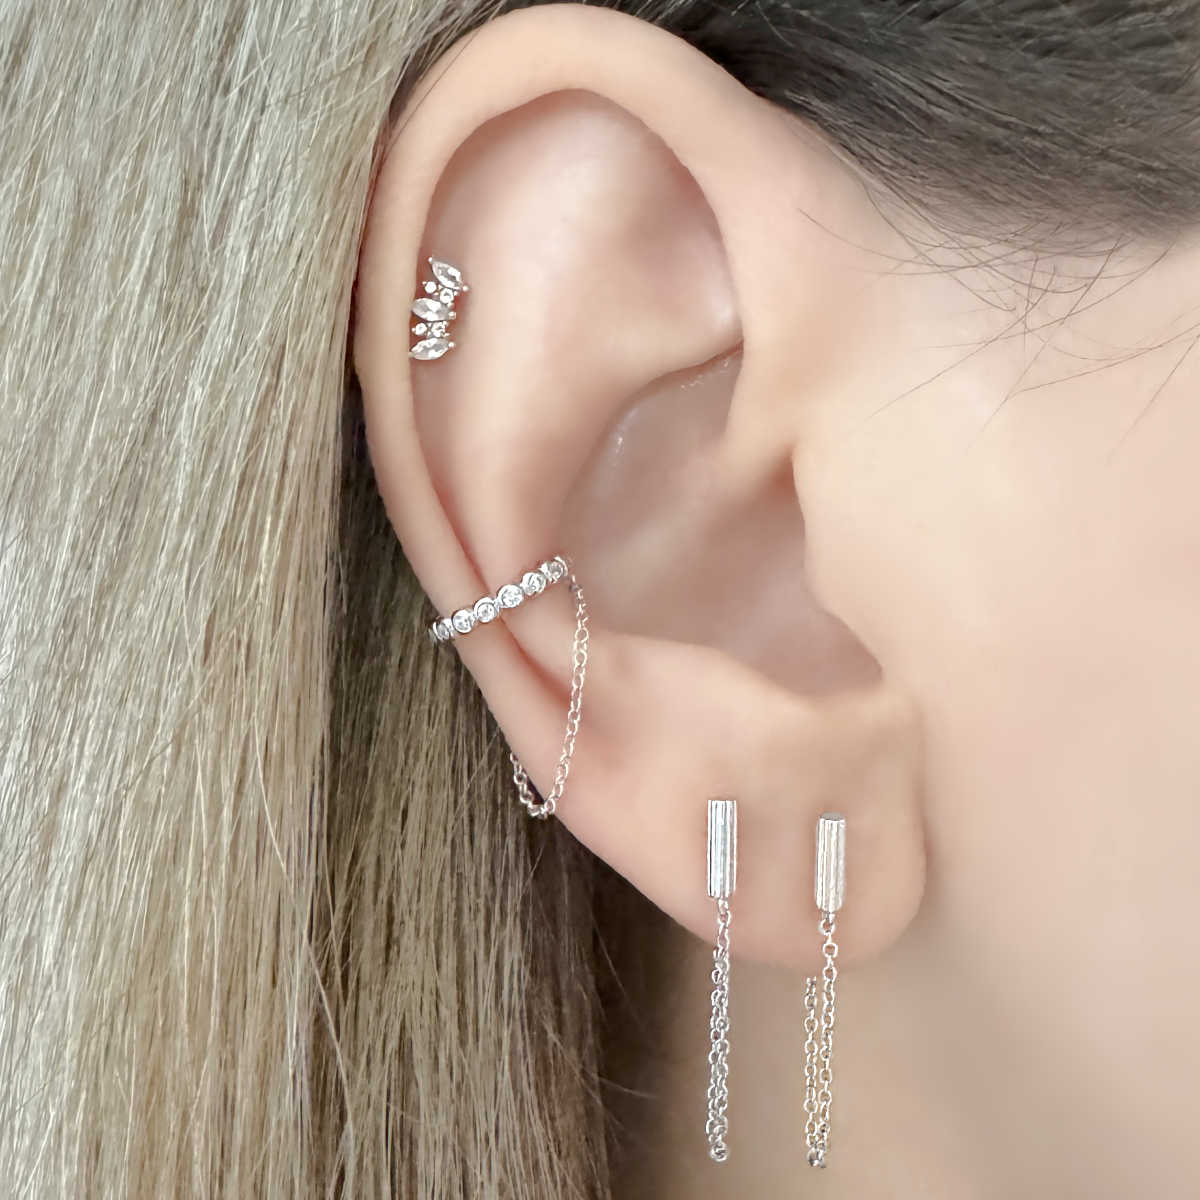 Silver Chain Link Earrings | Front to Back Dangle Hoops on Model